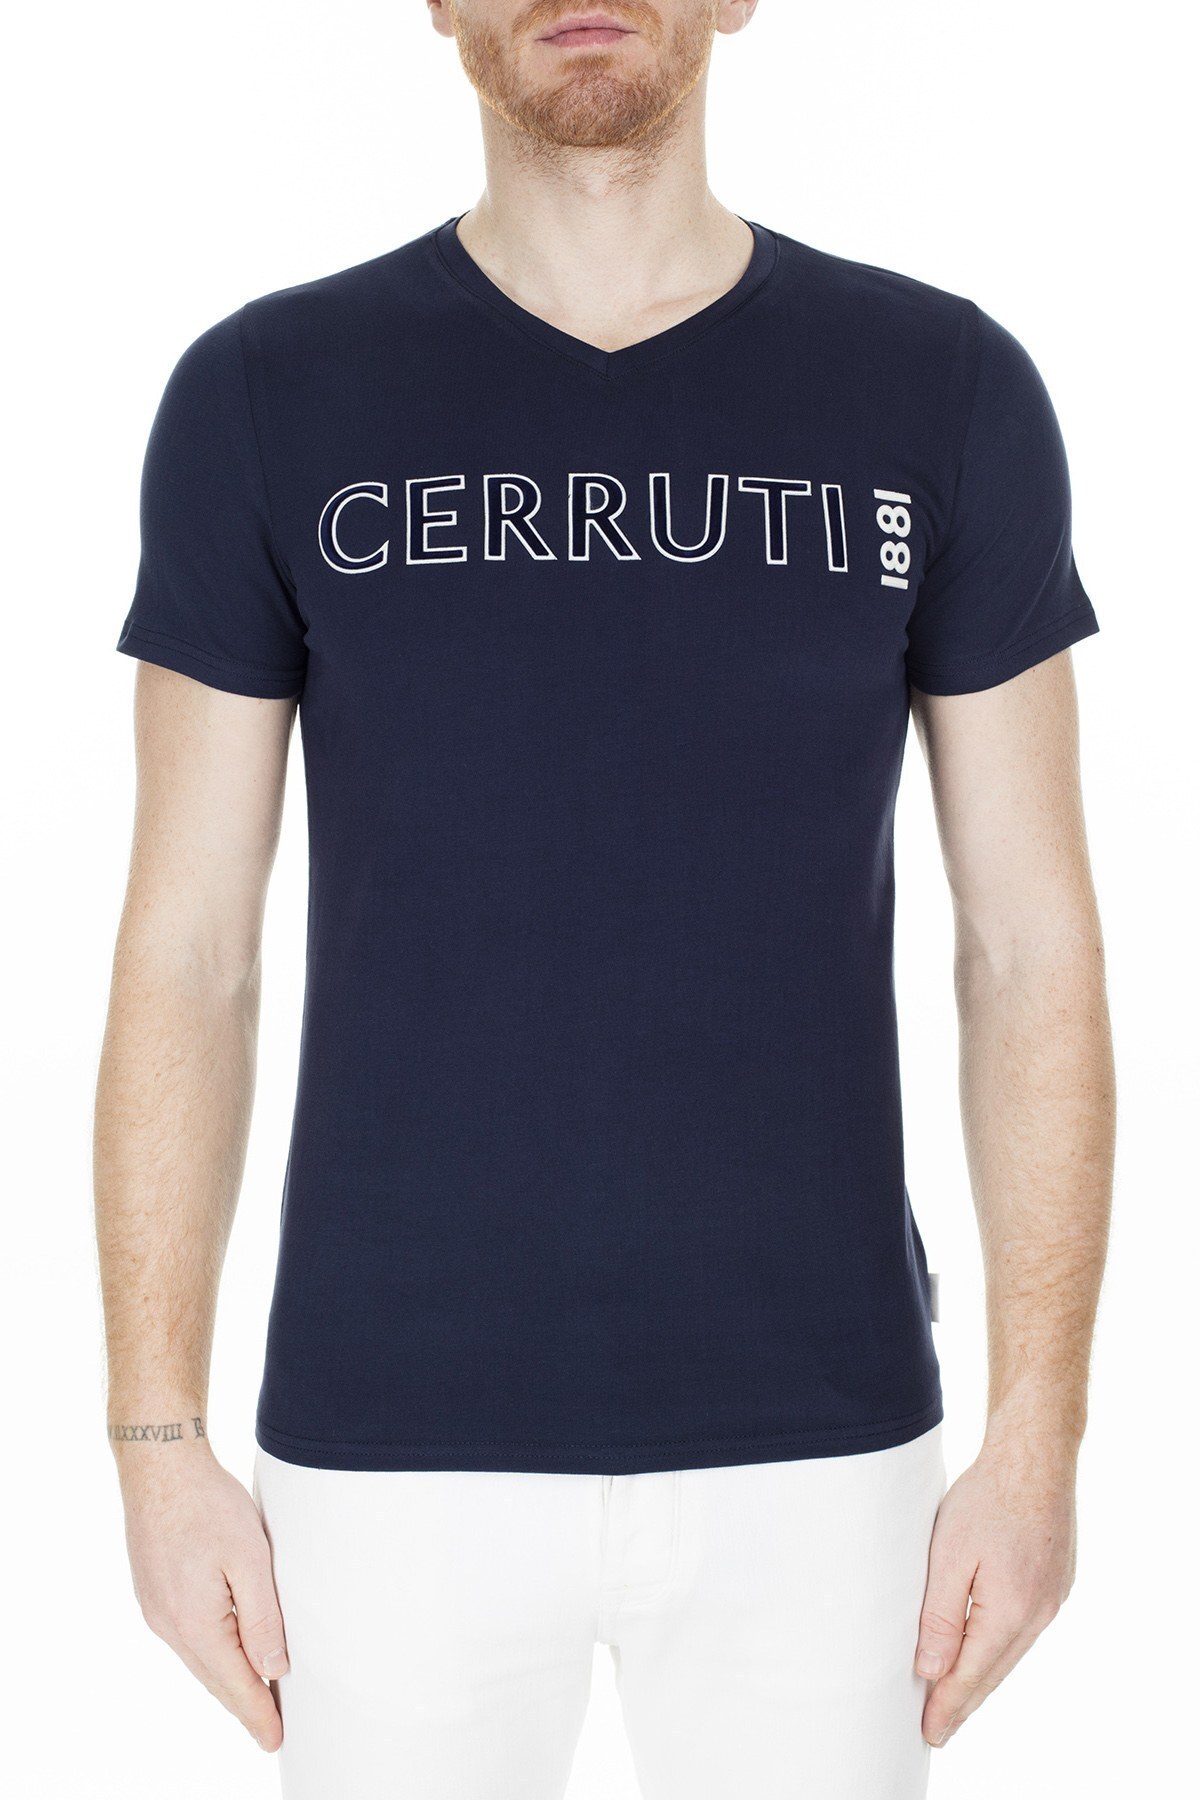 Cerruti 1881 Erkek T Shirt 203-001645 LACİVERT